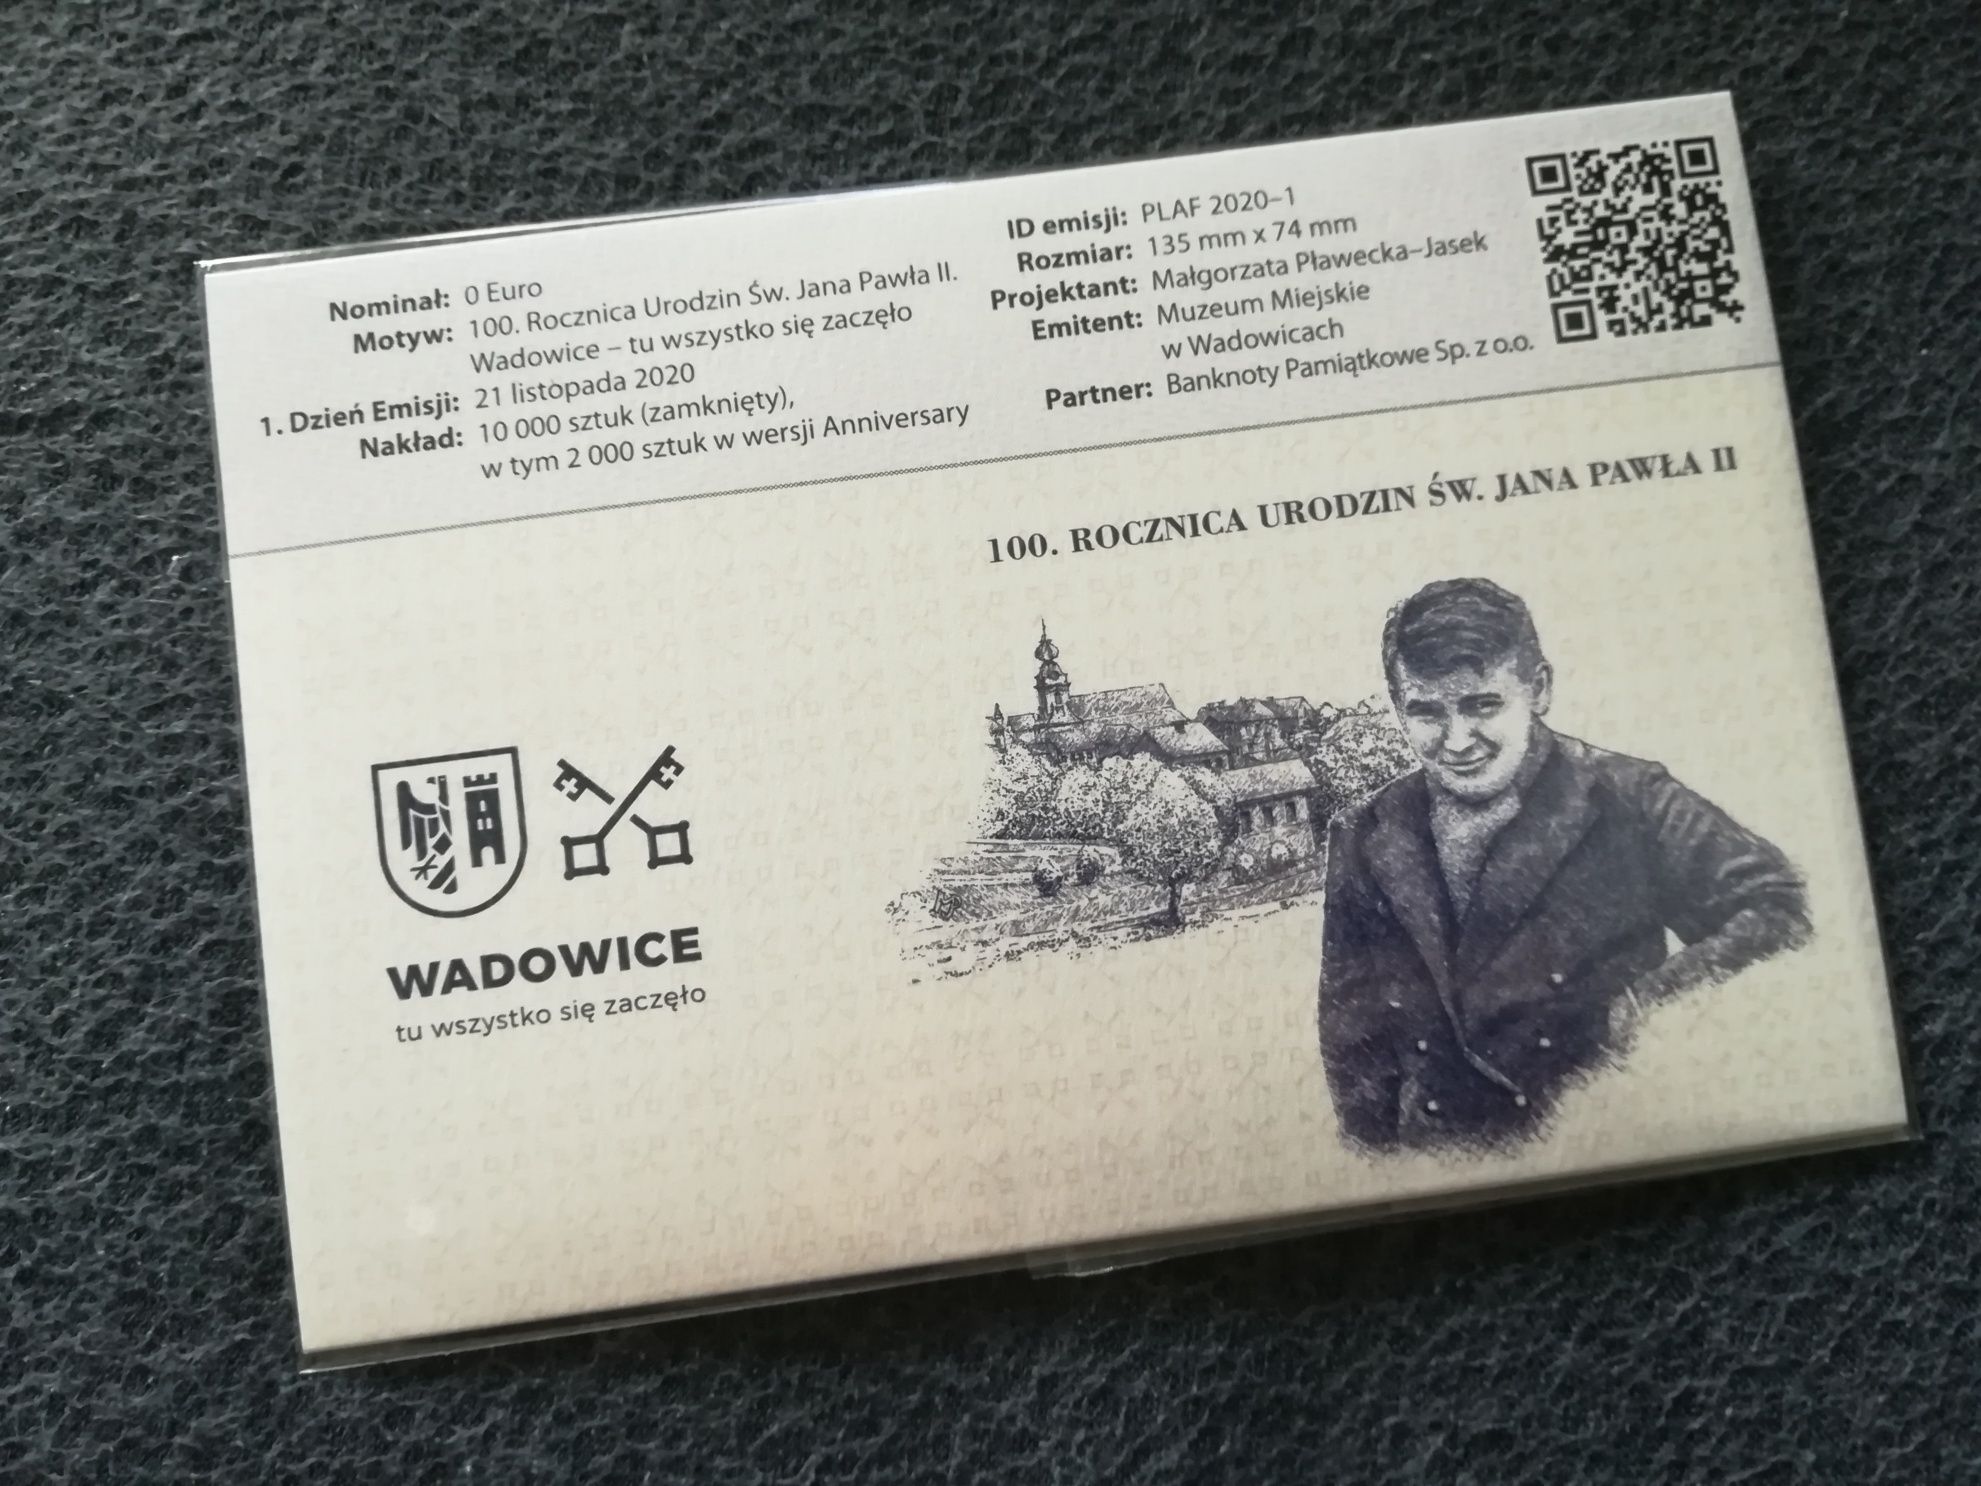 2x Banknot 0 euro Jan Paweł II, Wadowice - UNIKATOWY FOLDER! RR!